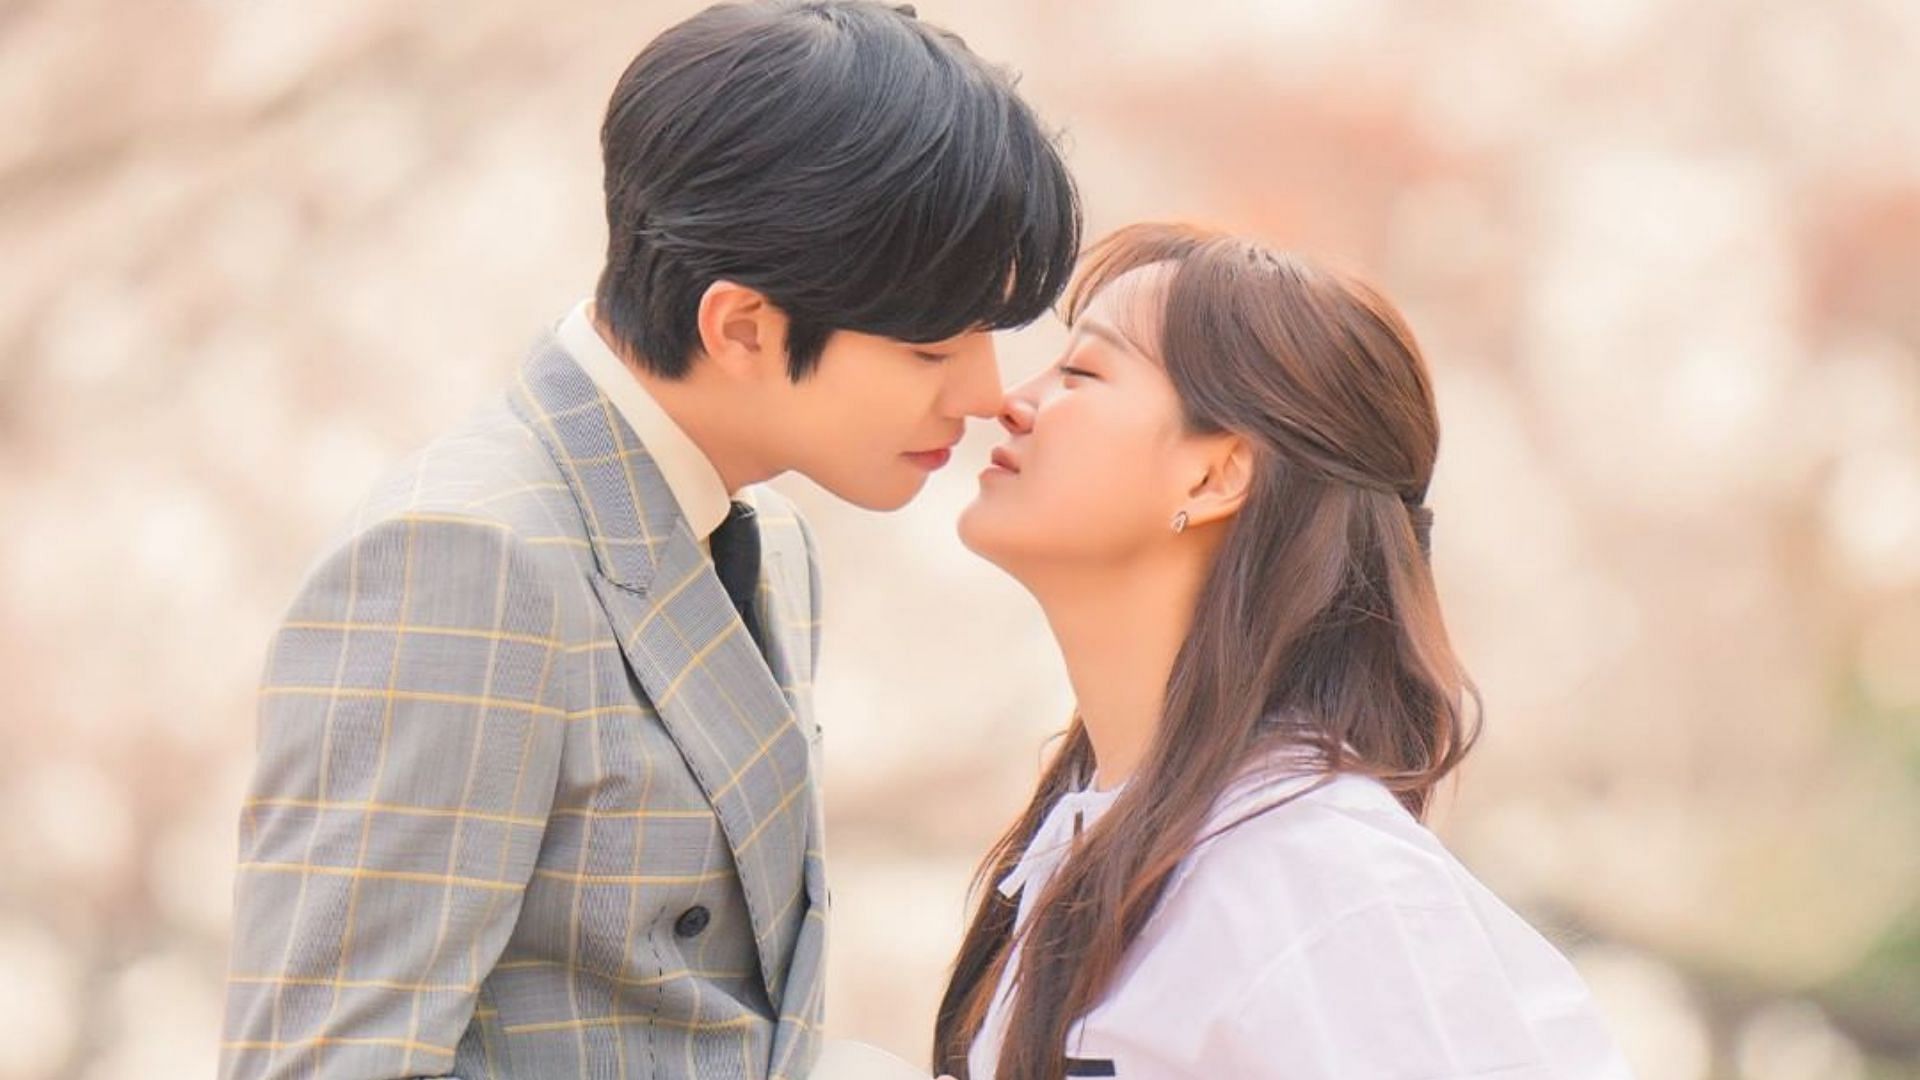 A still of Ahn Hyo-seop and Kim Se-jeong (Image via sbsdrama.official/ Instagram)